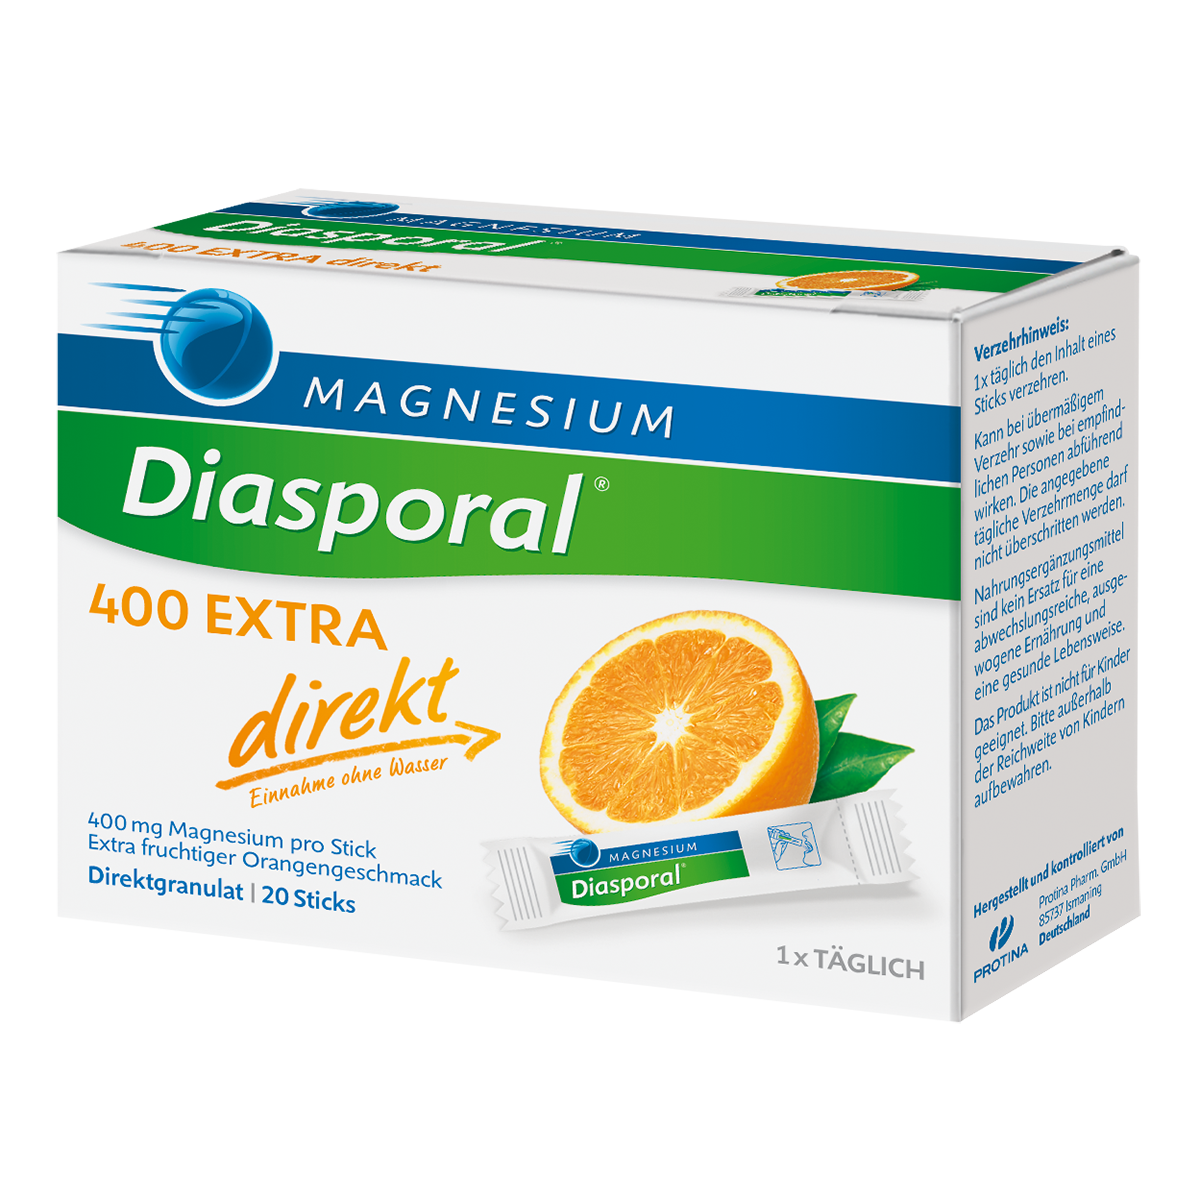 MAGNESIUM-DIASPORAL 400 EXTRA DIREKT